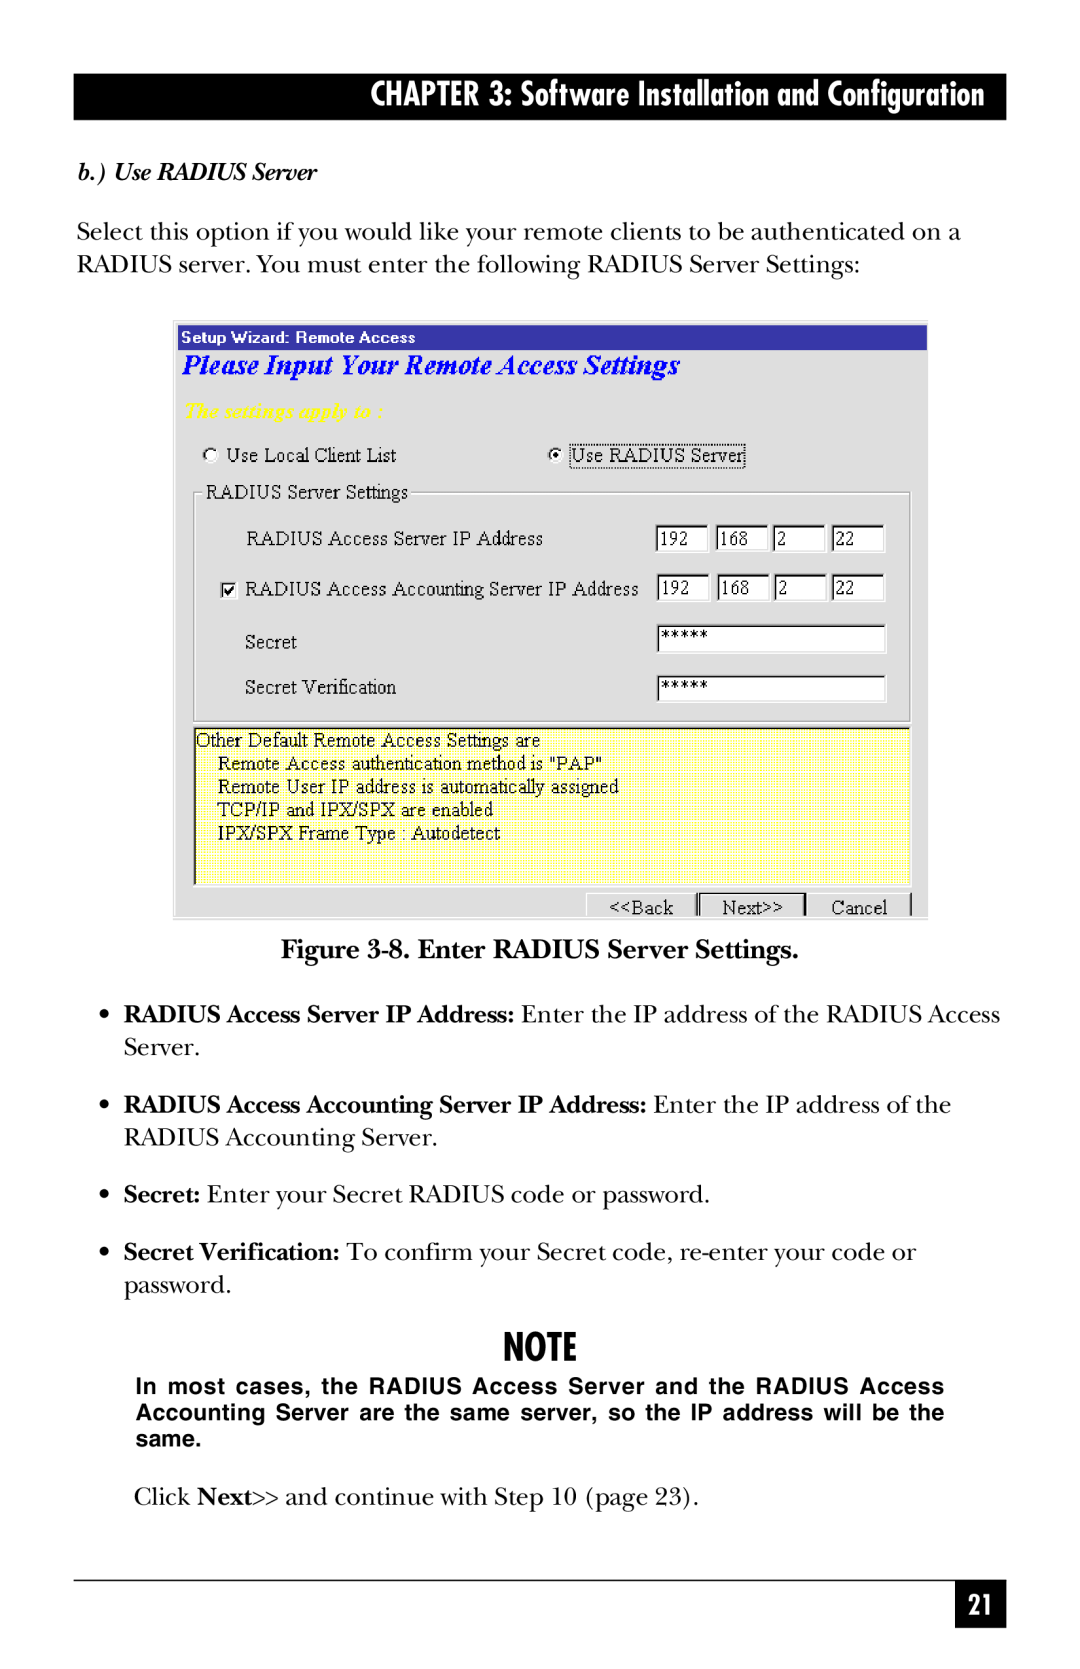 Black Box LRB500A 8. Enter RADIUS Server Settings, b. Use RADIUS Server, Software Installation and Configuration 